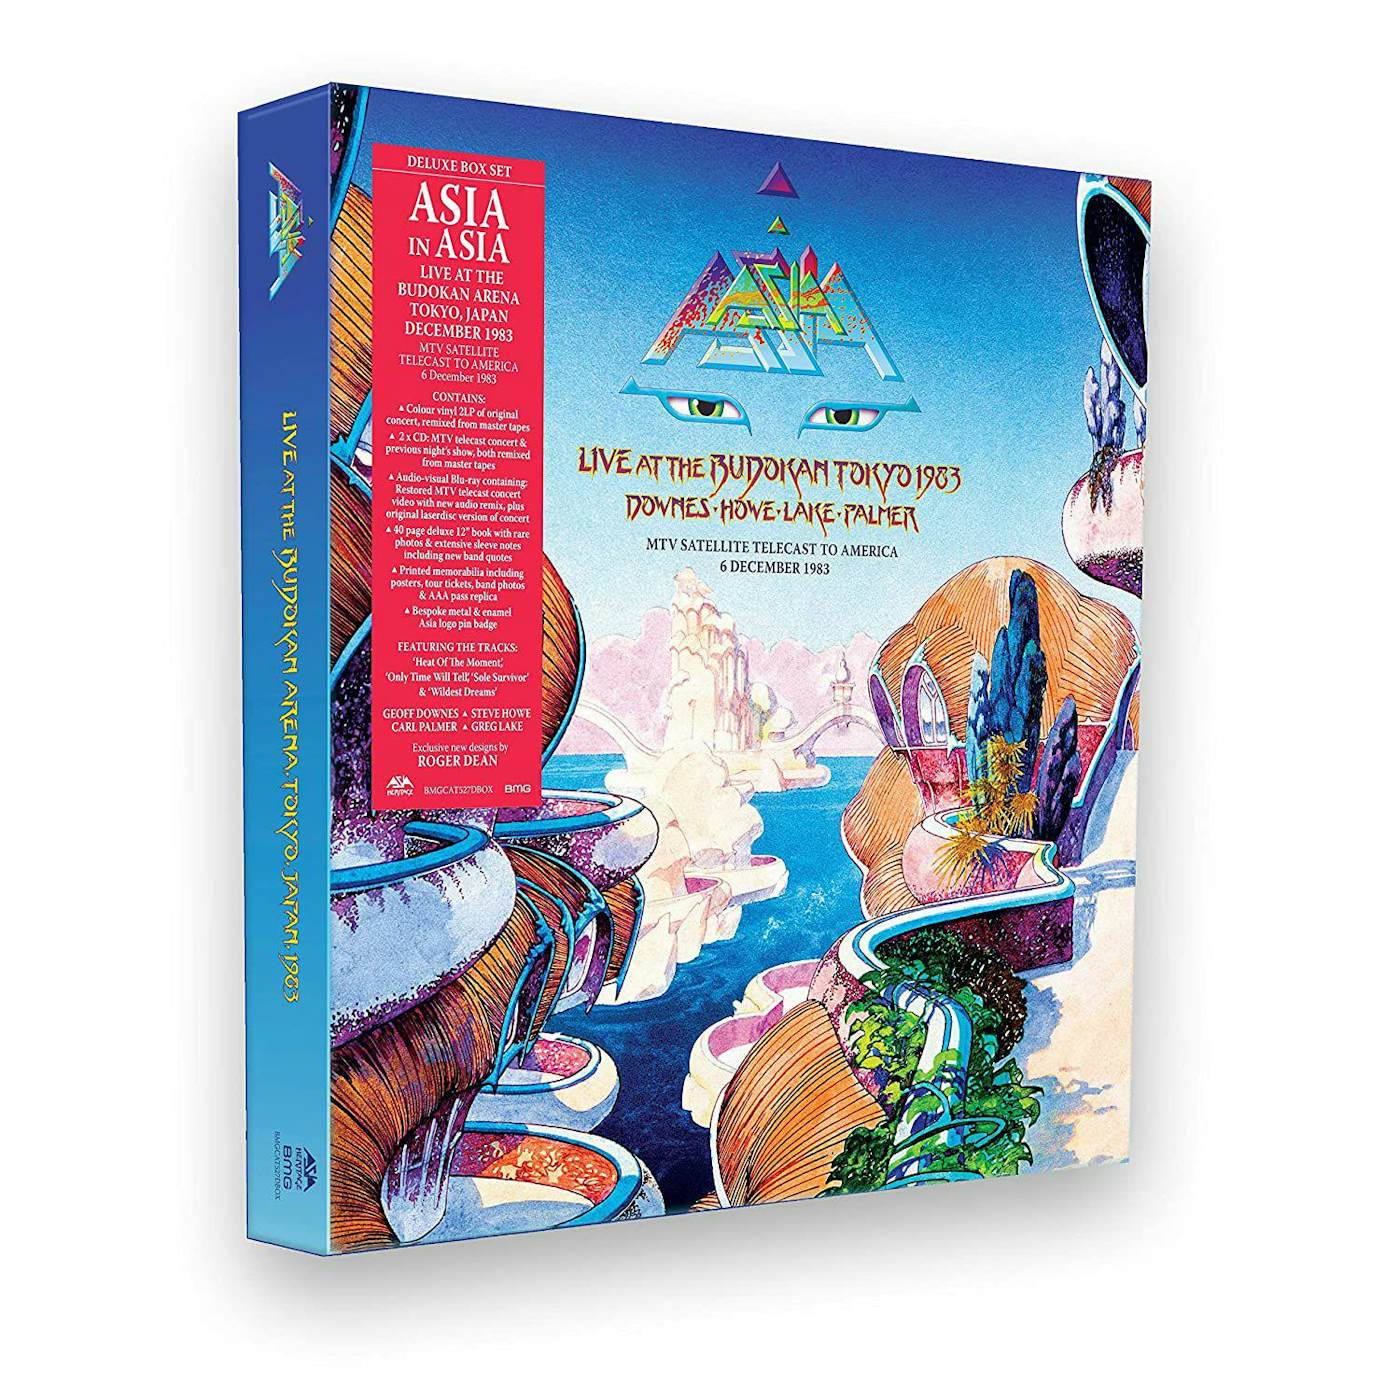 Asia In Asia - Live At The Budokan, Tokyo, 1983 (Deluxe Box Set/2LP/2CD/Blu-Ray/etc.) (Vinyl)